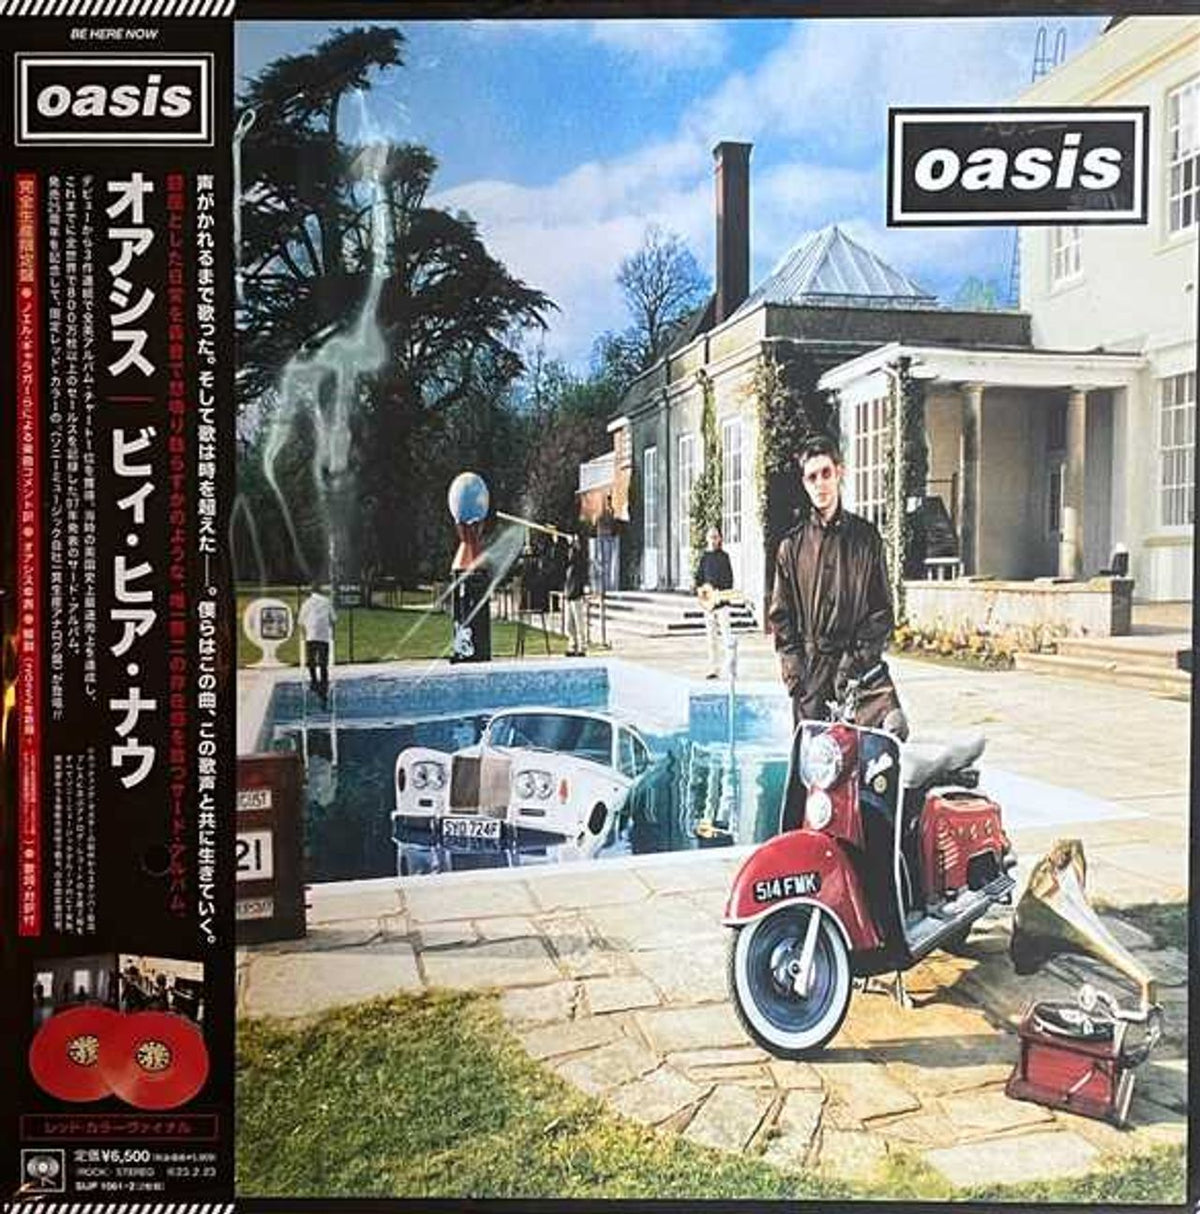 Oasis Be Here Now - Rare Vinyl Records at RareVinyl.com